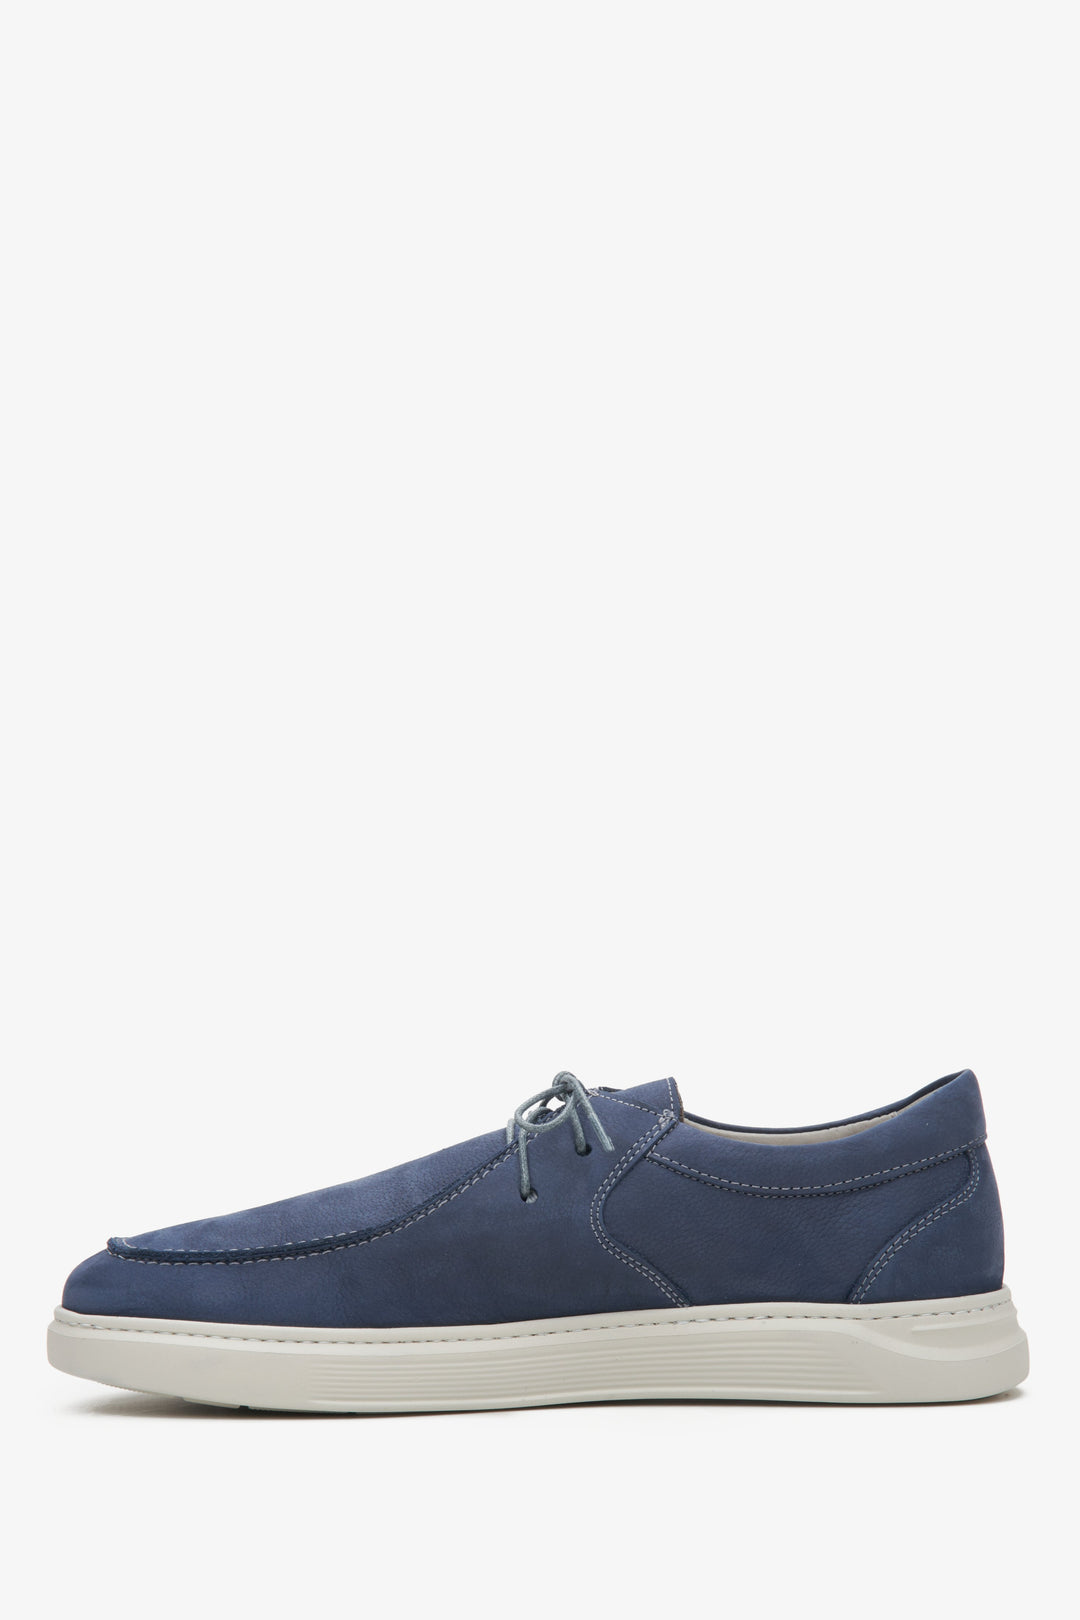 Estro blue soft velour men's loafers - side profile of the shoe.